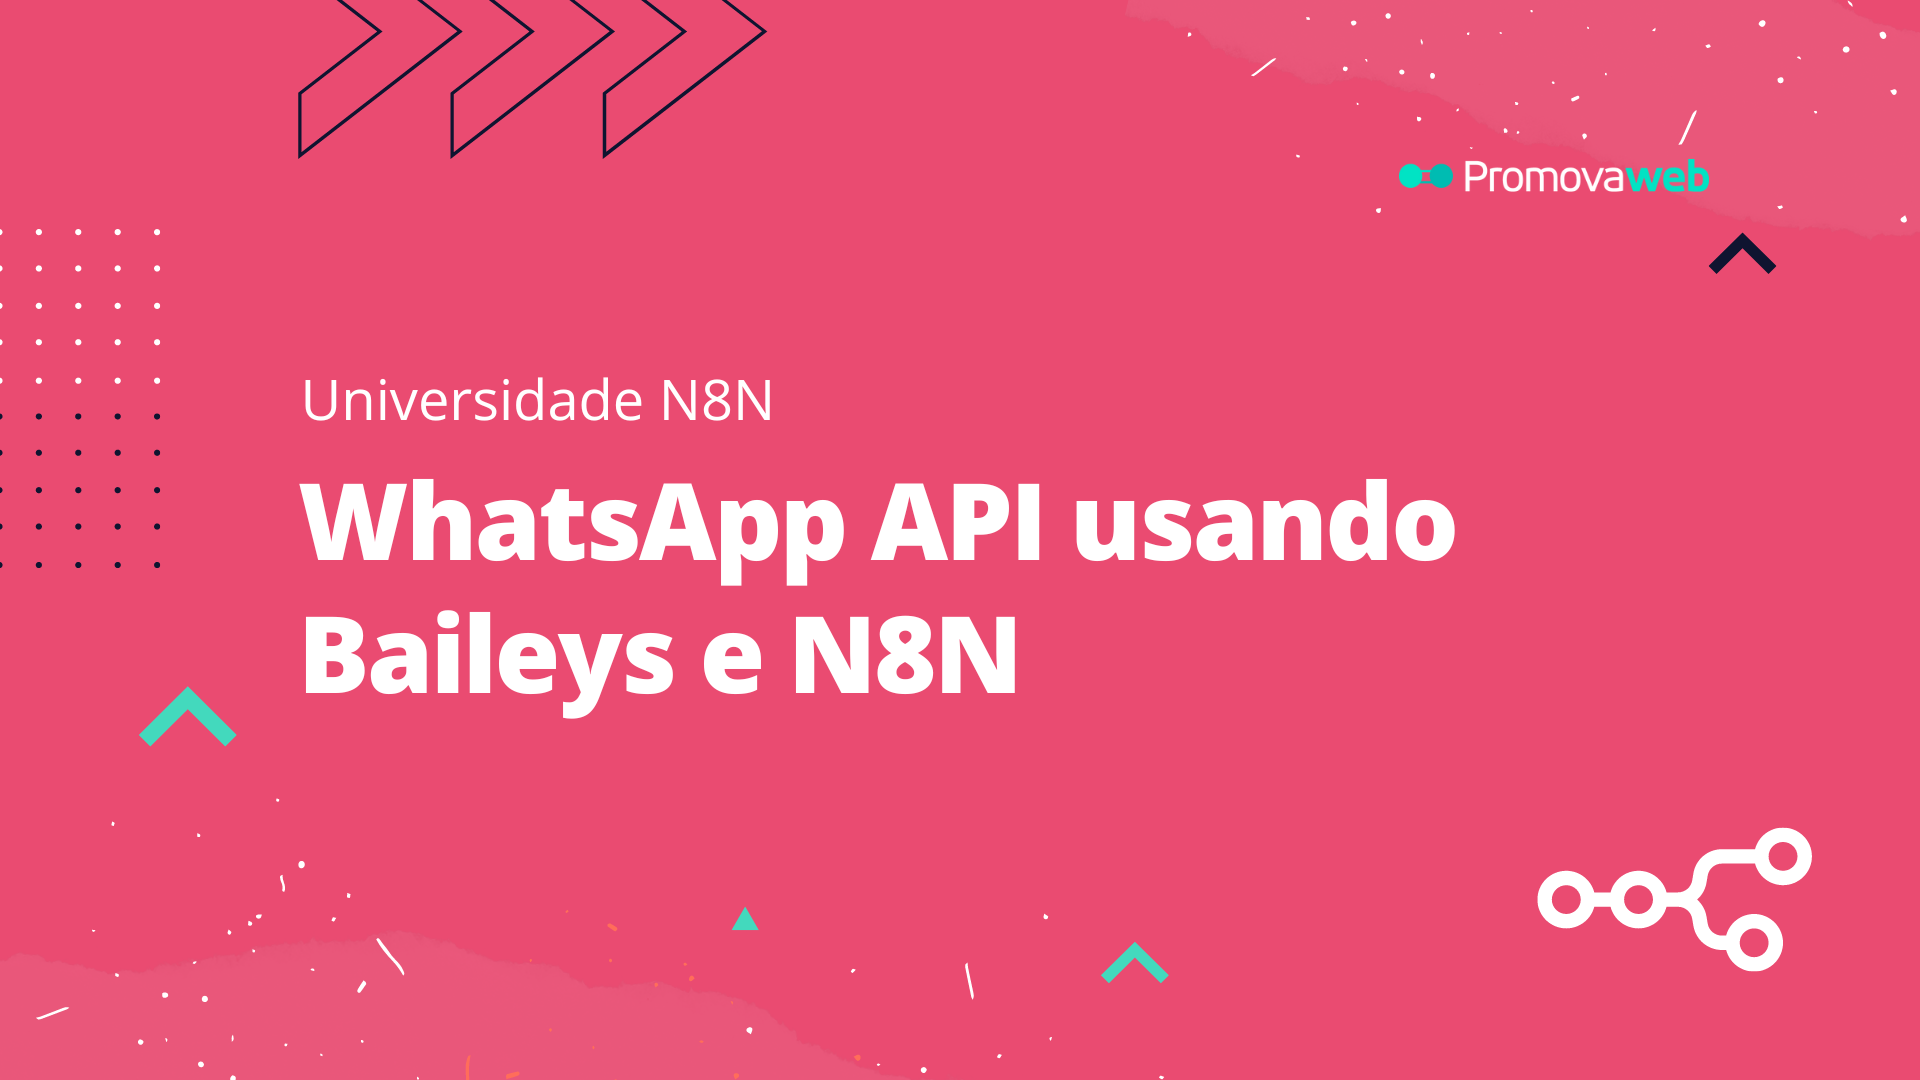 WhatsApp API usando Baileys e N8N